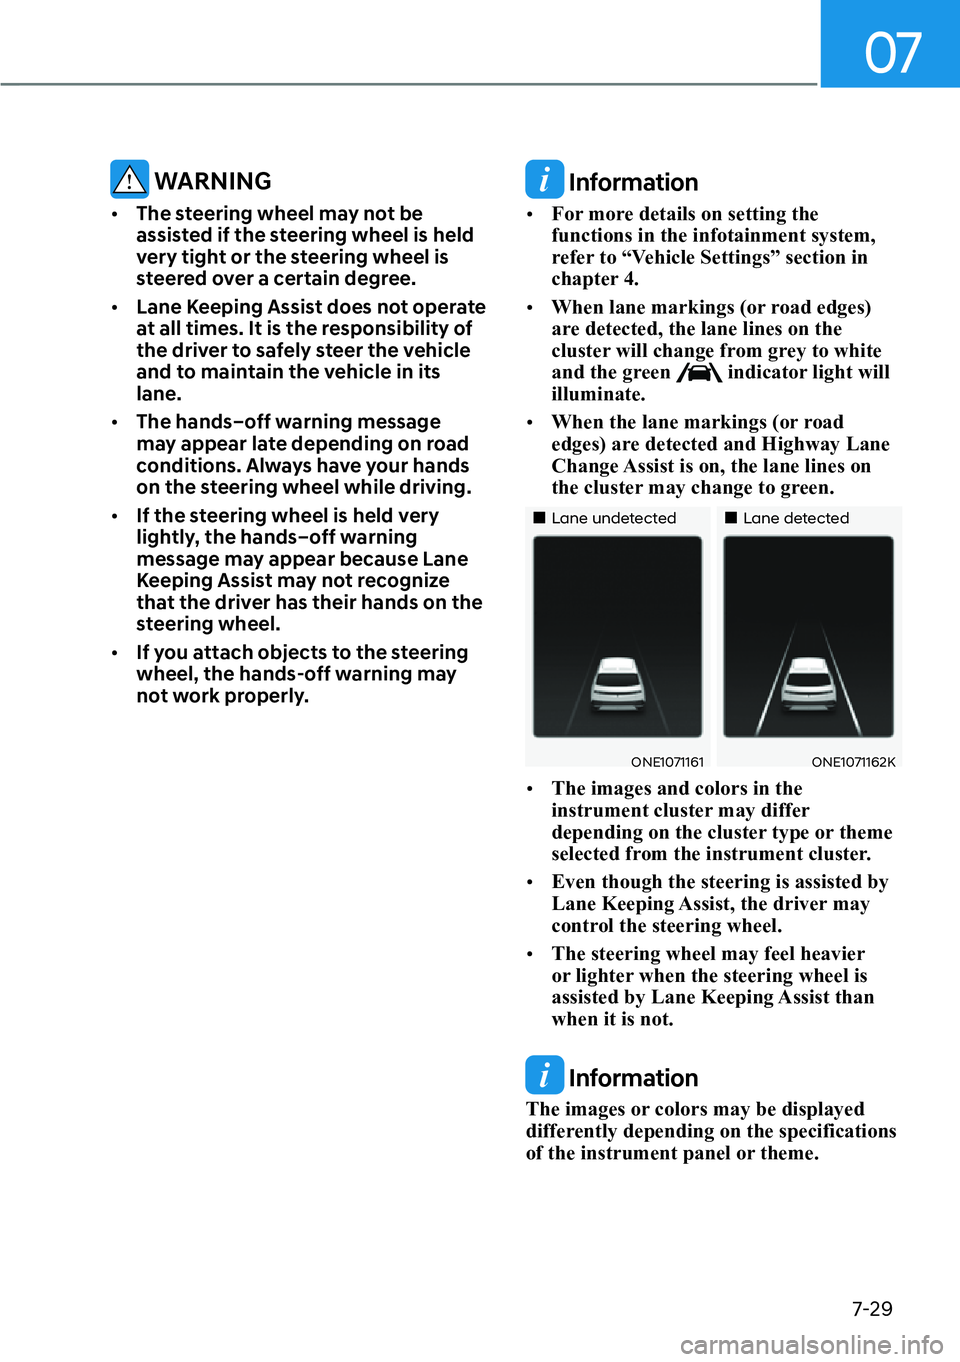 HYUNDAI IONIQ 5 2022 Owners Manual 07
7-29
 WARNING
[�The steering wheel may not be 
assisted if the steering wheel is held 
very tight or the steering wheel is 
steered over a certain degree.
[�Lane Keeping Assist does not operate